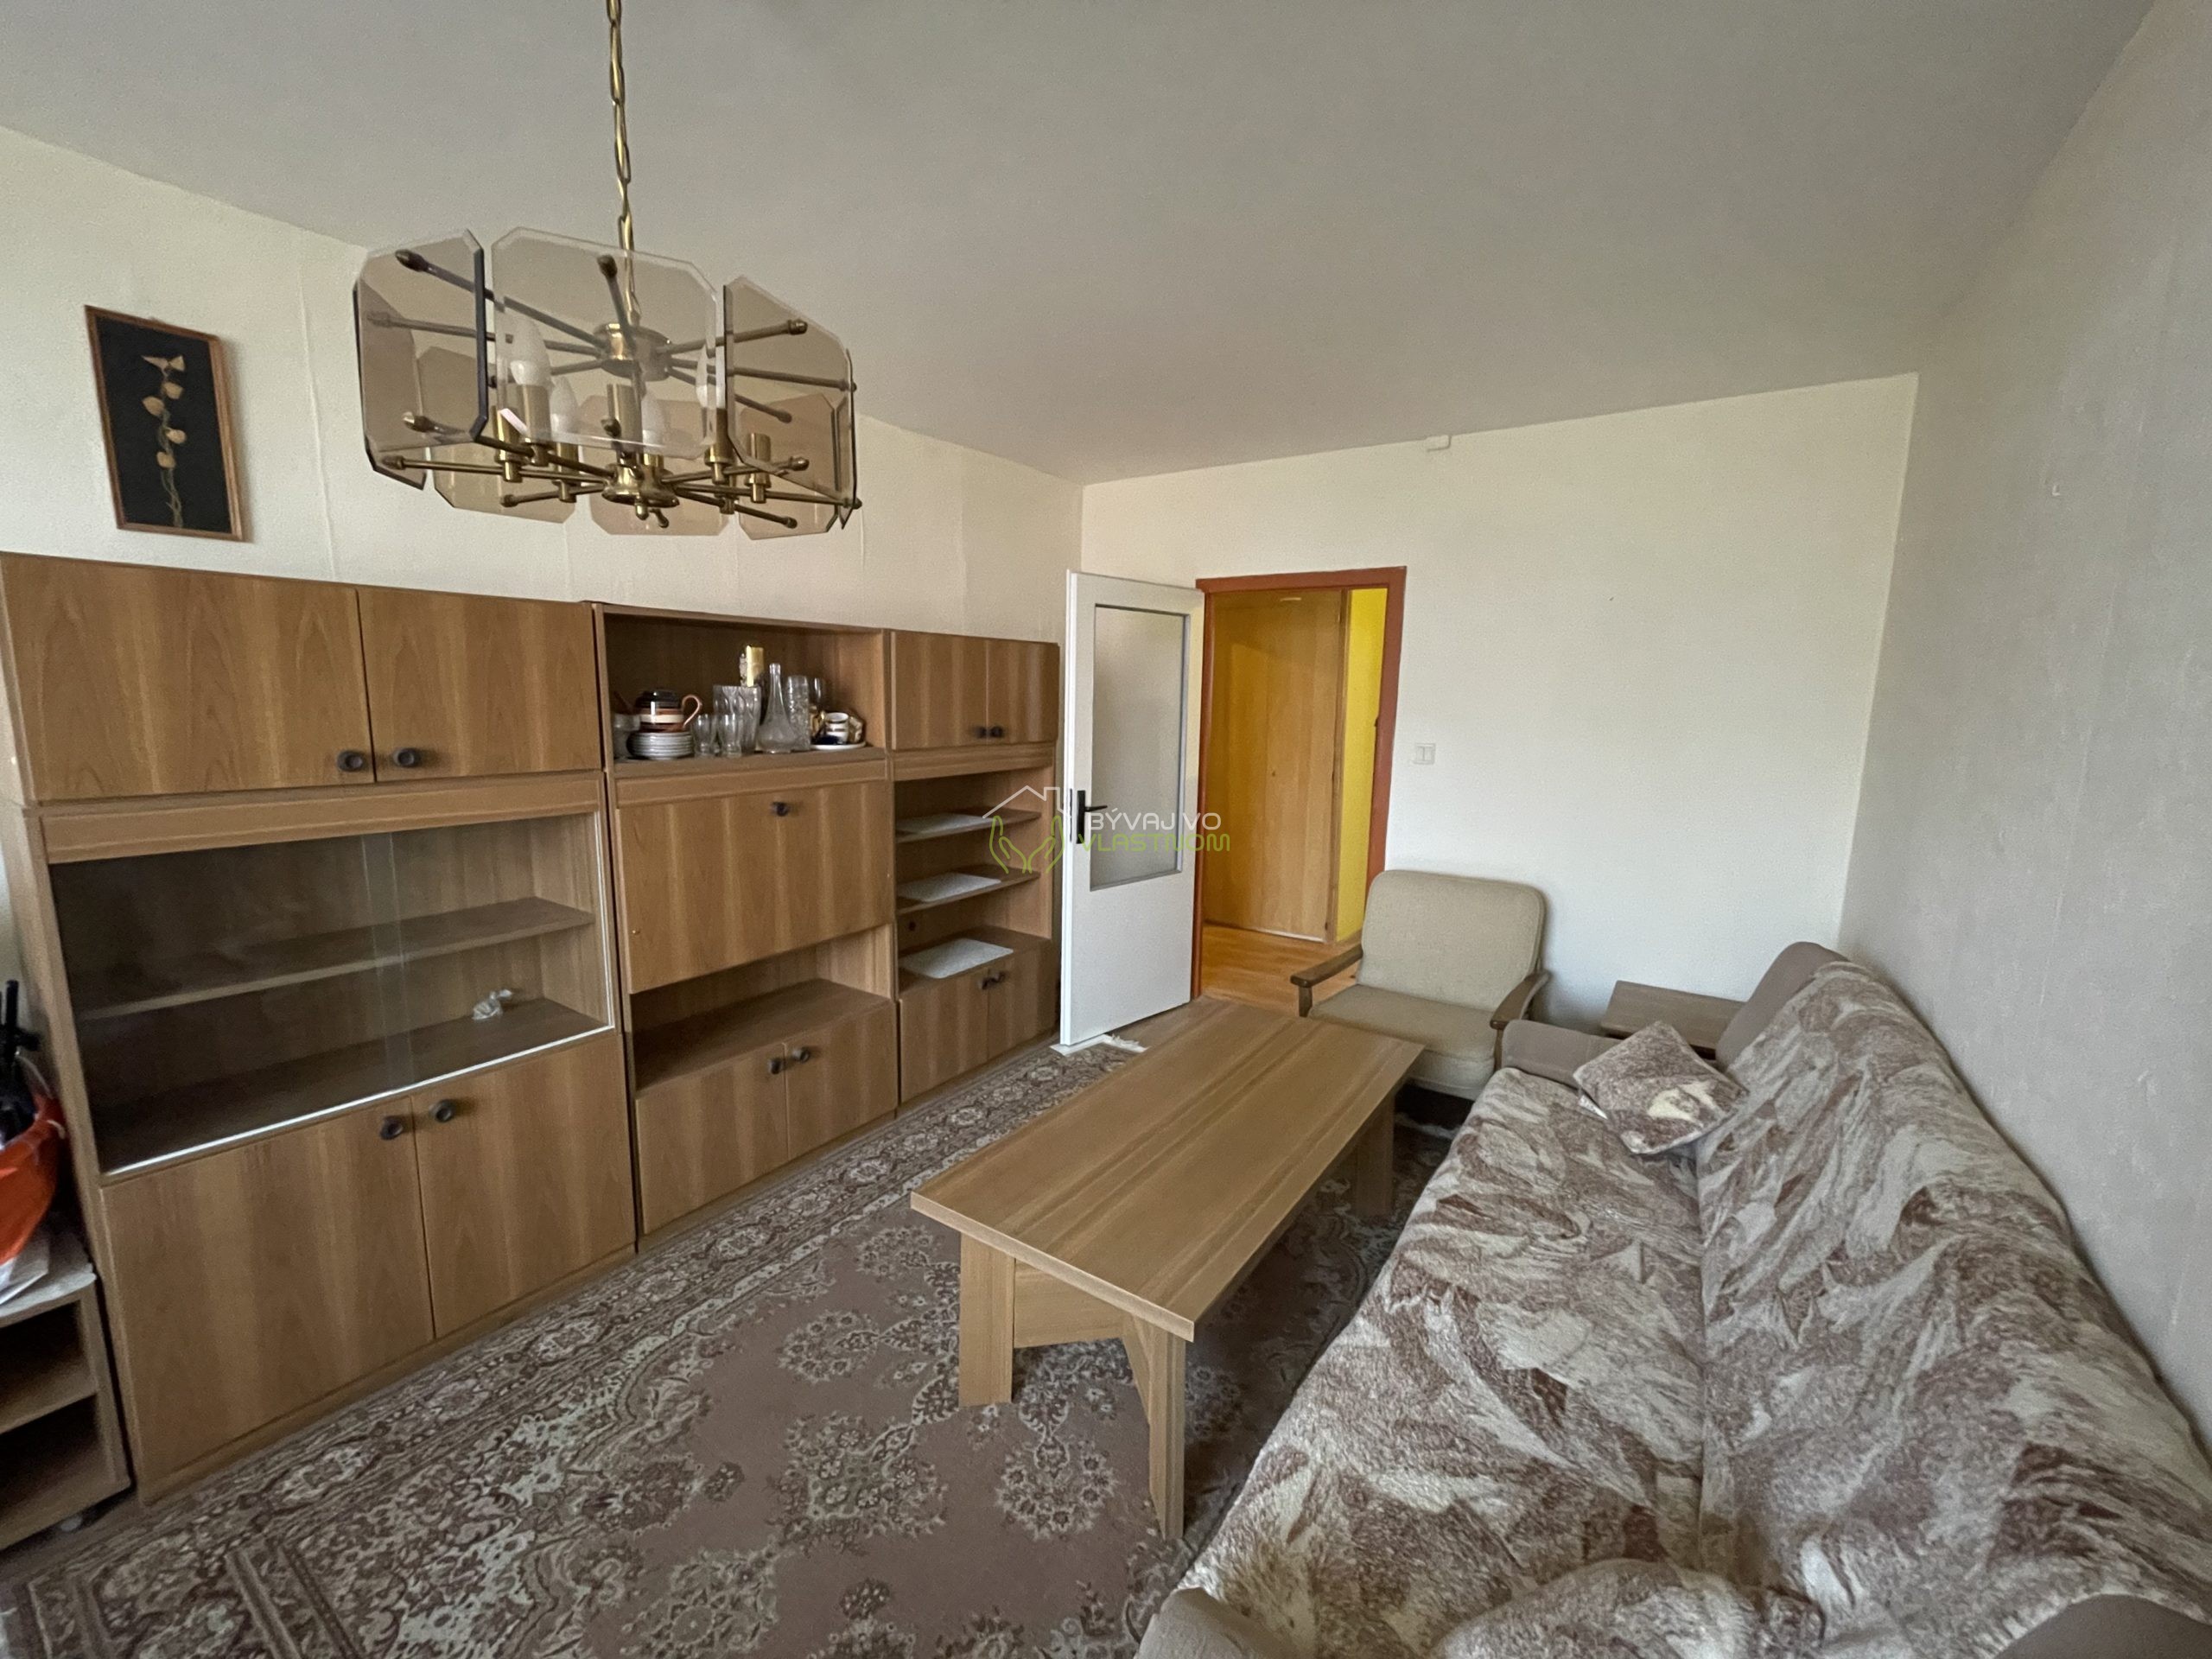 Na predaj 4- izbový byt v Moldave nad Bodvou